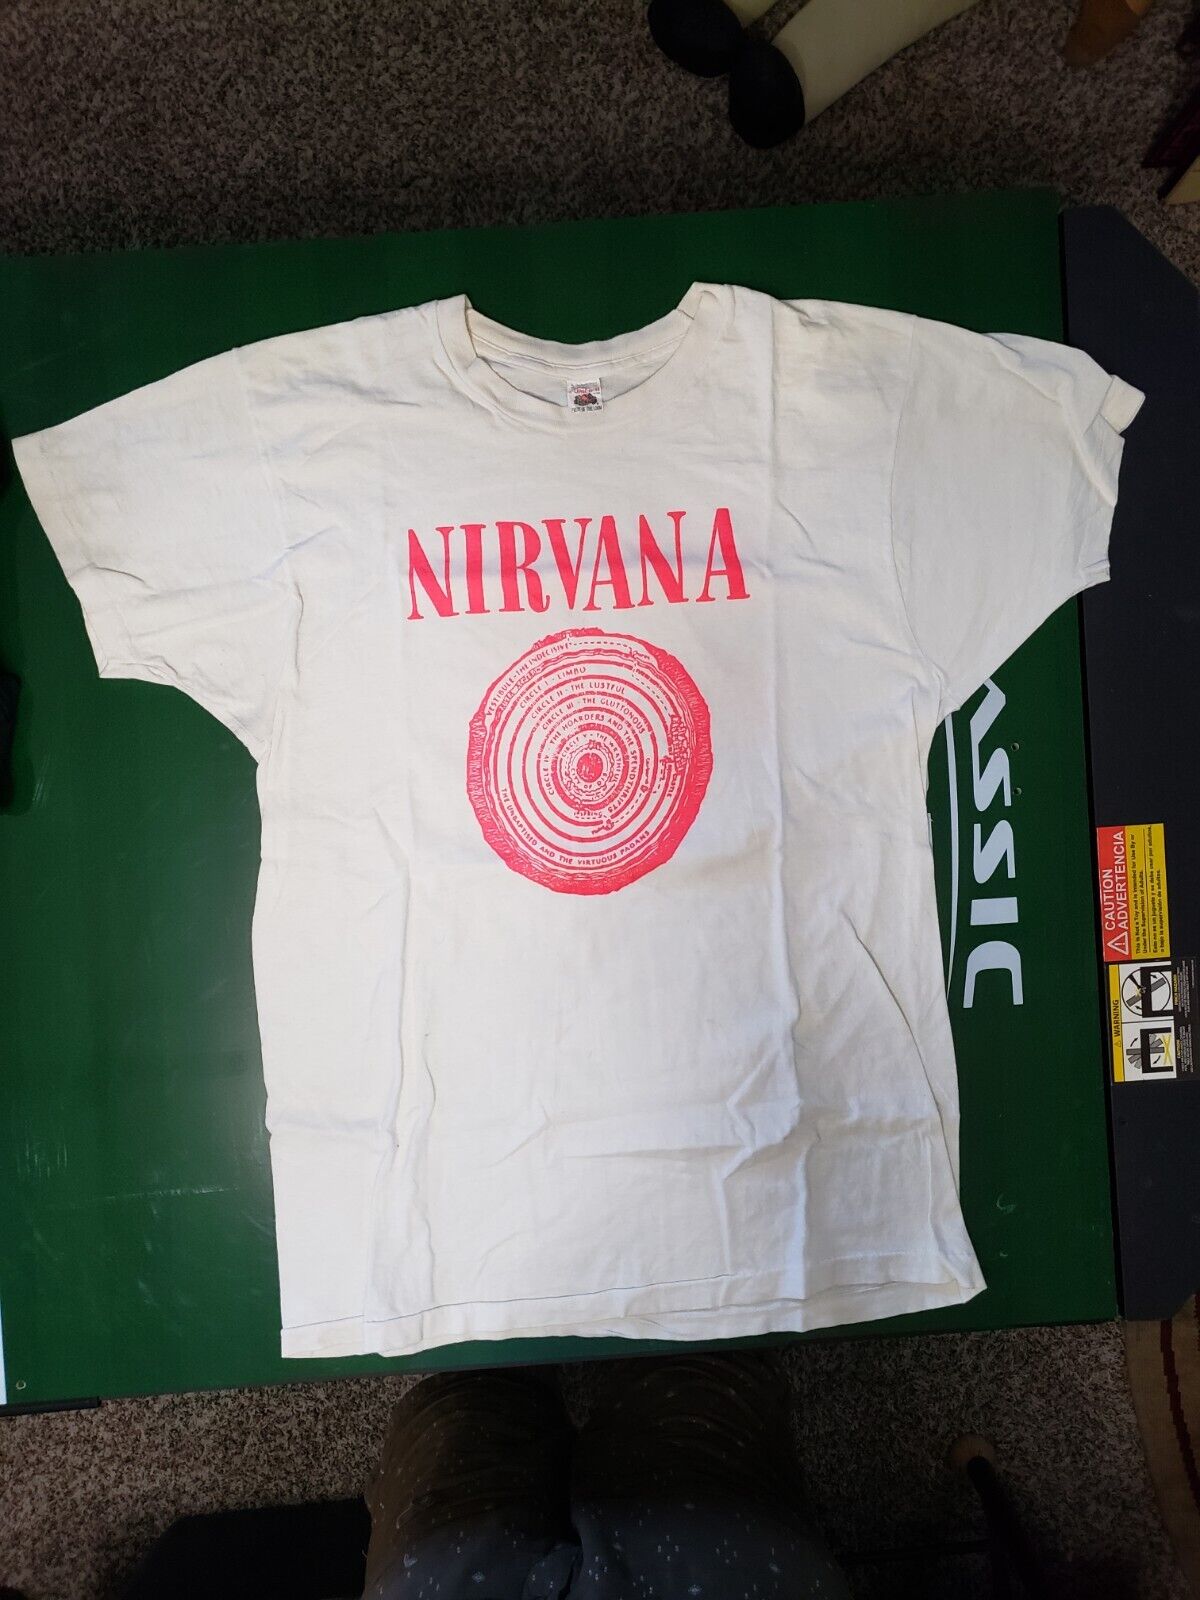 Vintage Original Nirvana Tee Shirt Sub Pop Grunge 90s Punk Metal Emo Kurt Cobain